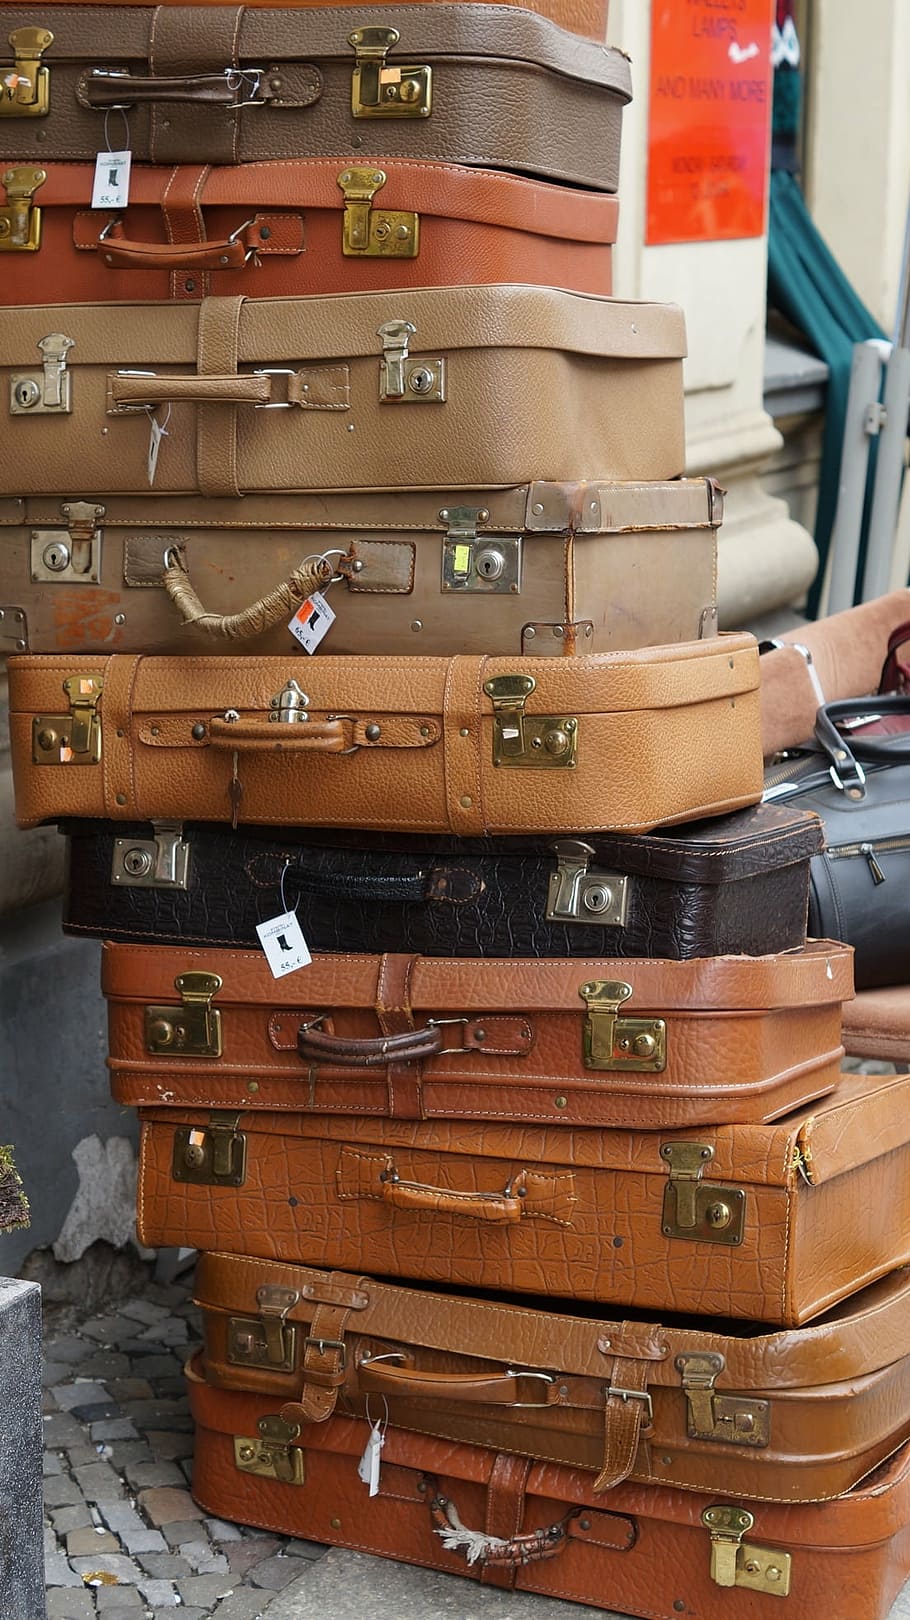 luggage, flea market, sale, vintage, old, brown, leather, suitcase